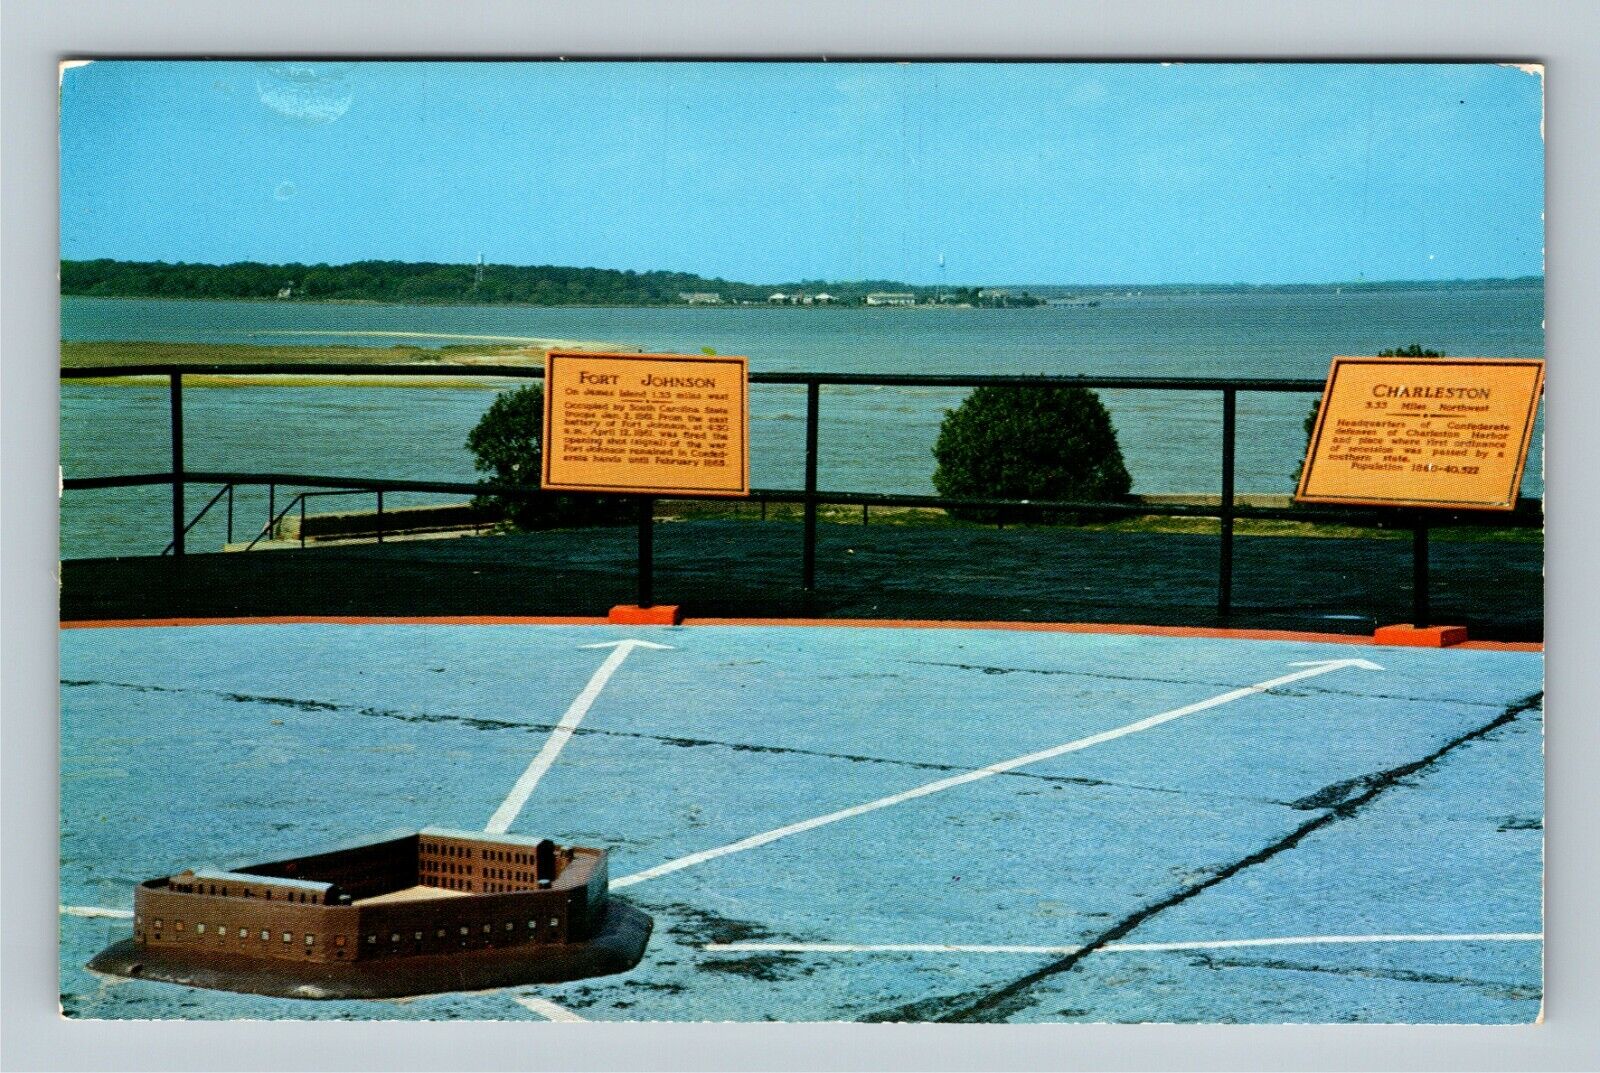 Charleston SC Fort Sumpter Monument, Scale Model Vintage South Carolina Postcard